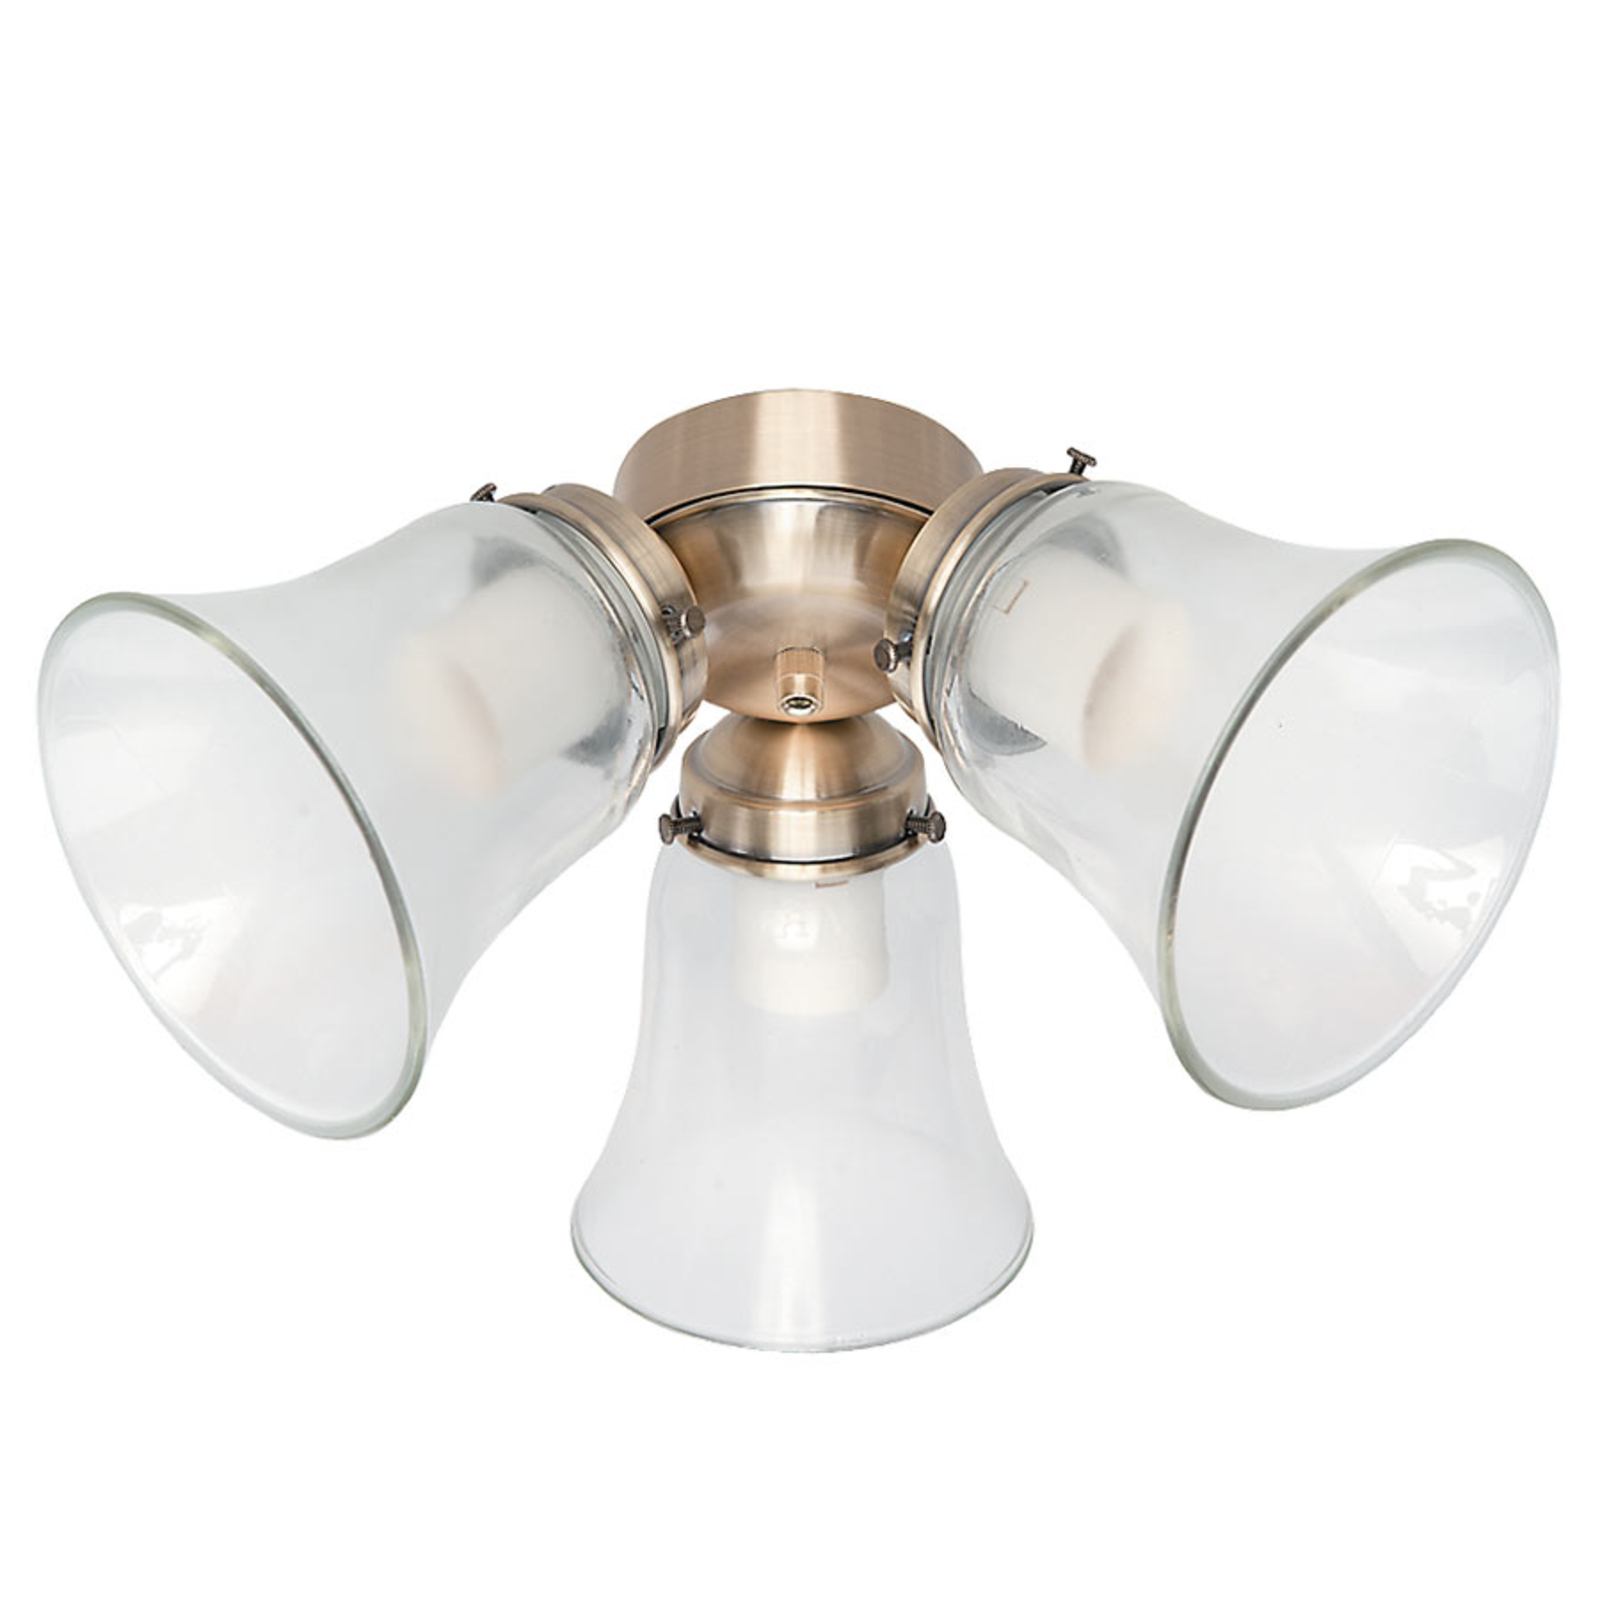 Light for Hunter ceiling fans, antique brass